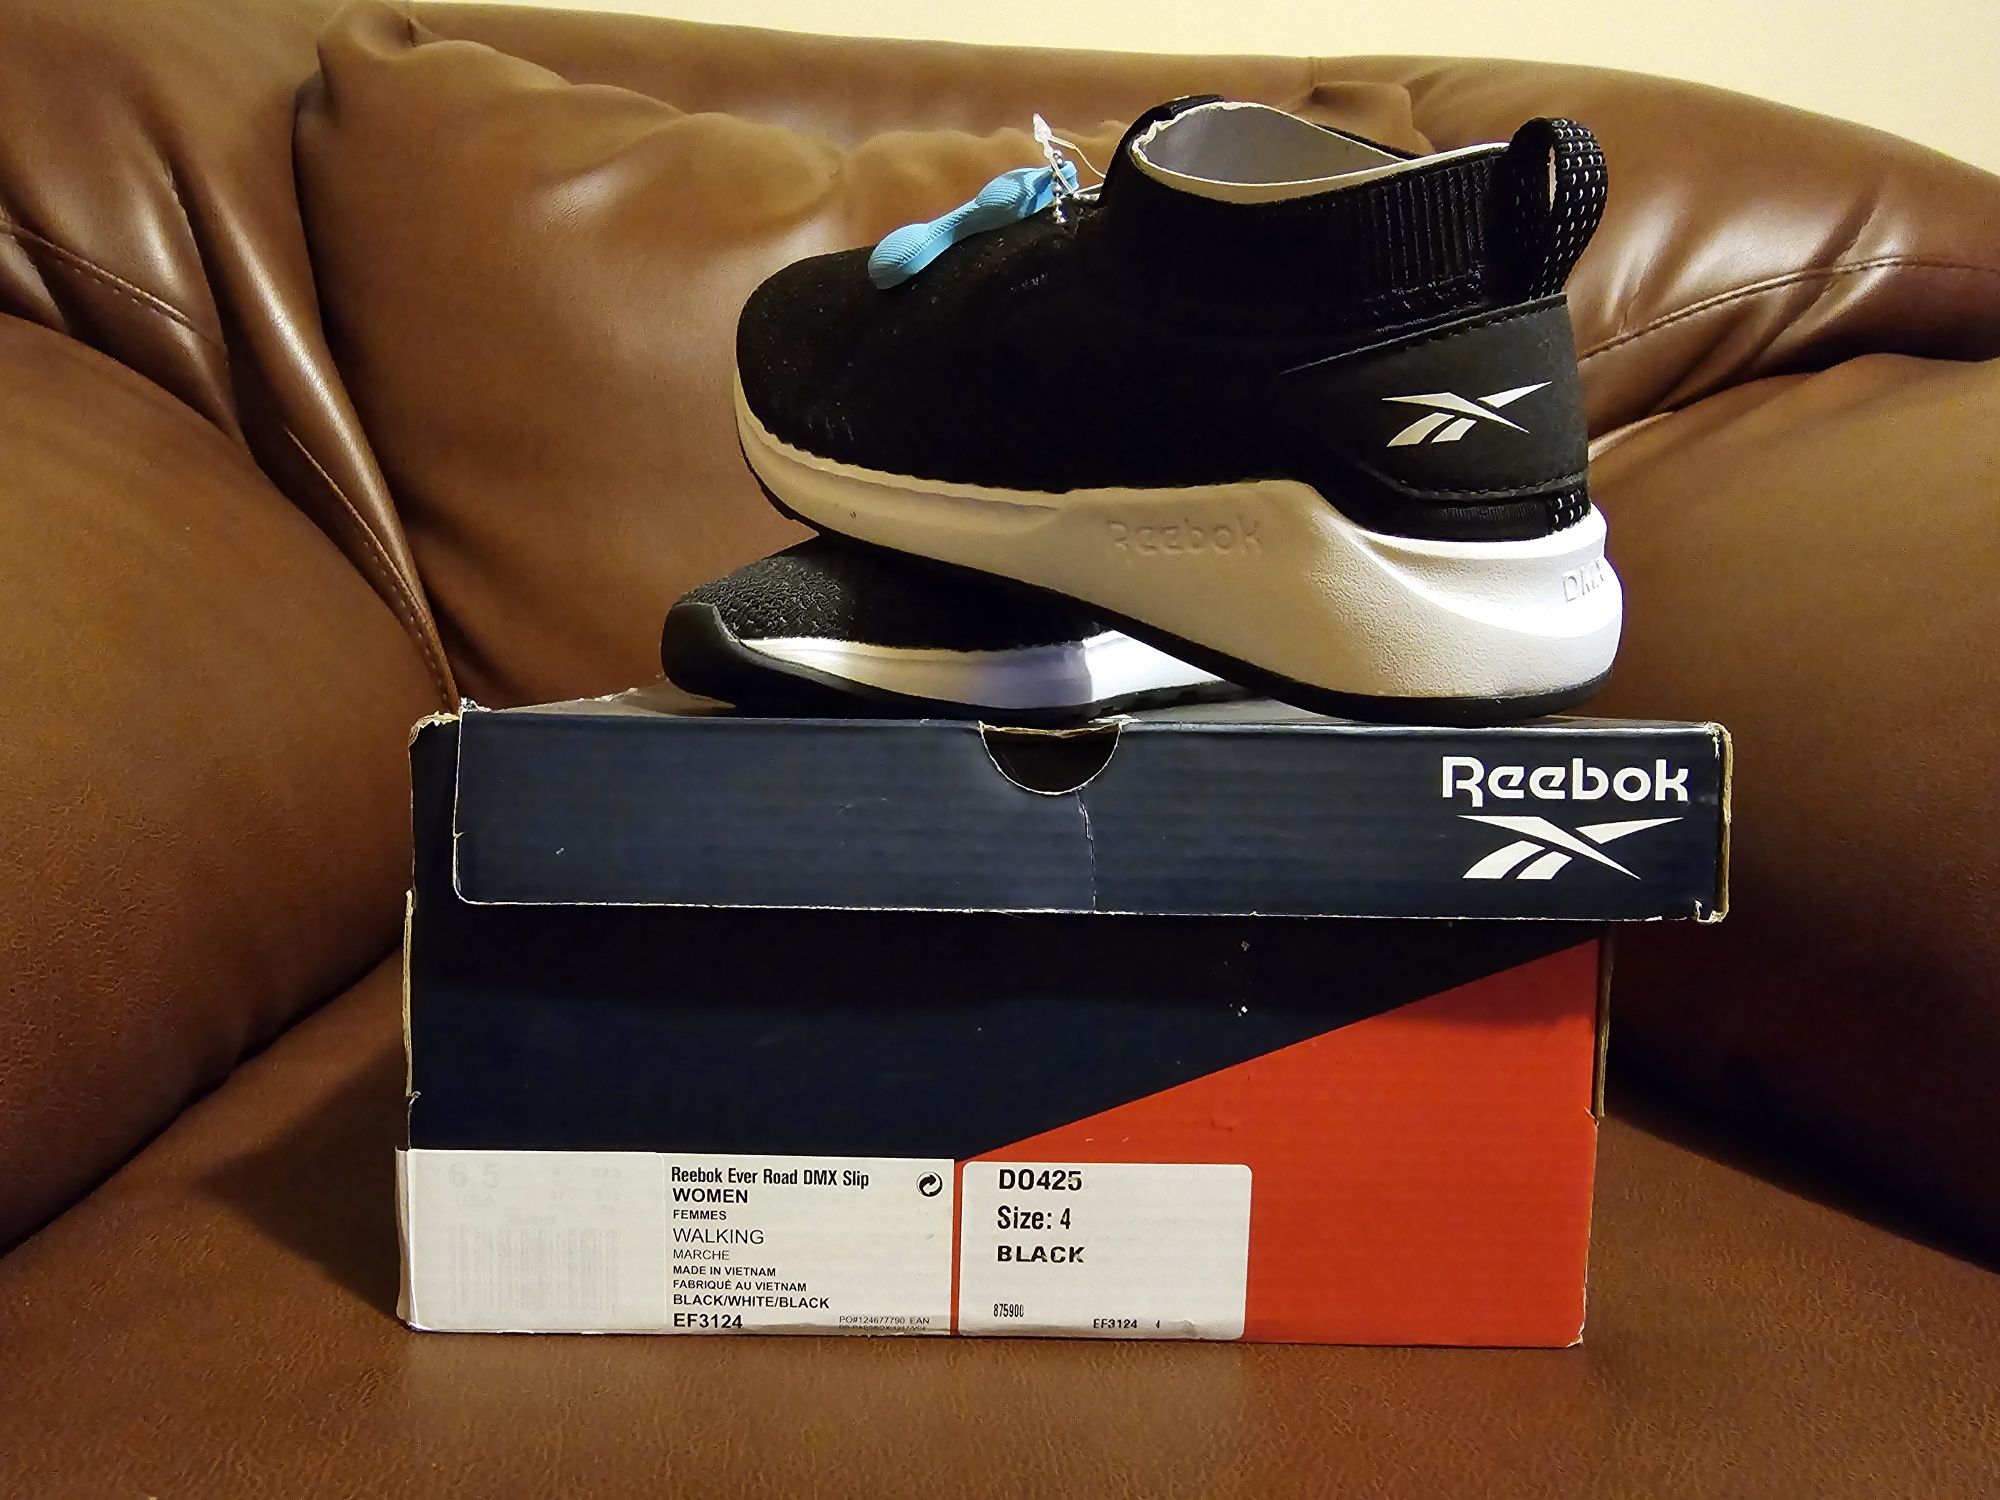 Reebok EVER ROAD DMX SLIP ON
Дамски ежедневни спортни обувки Код: 
220